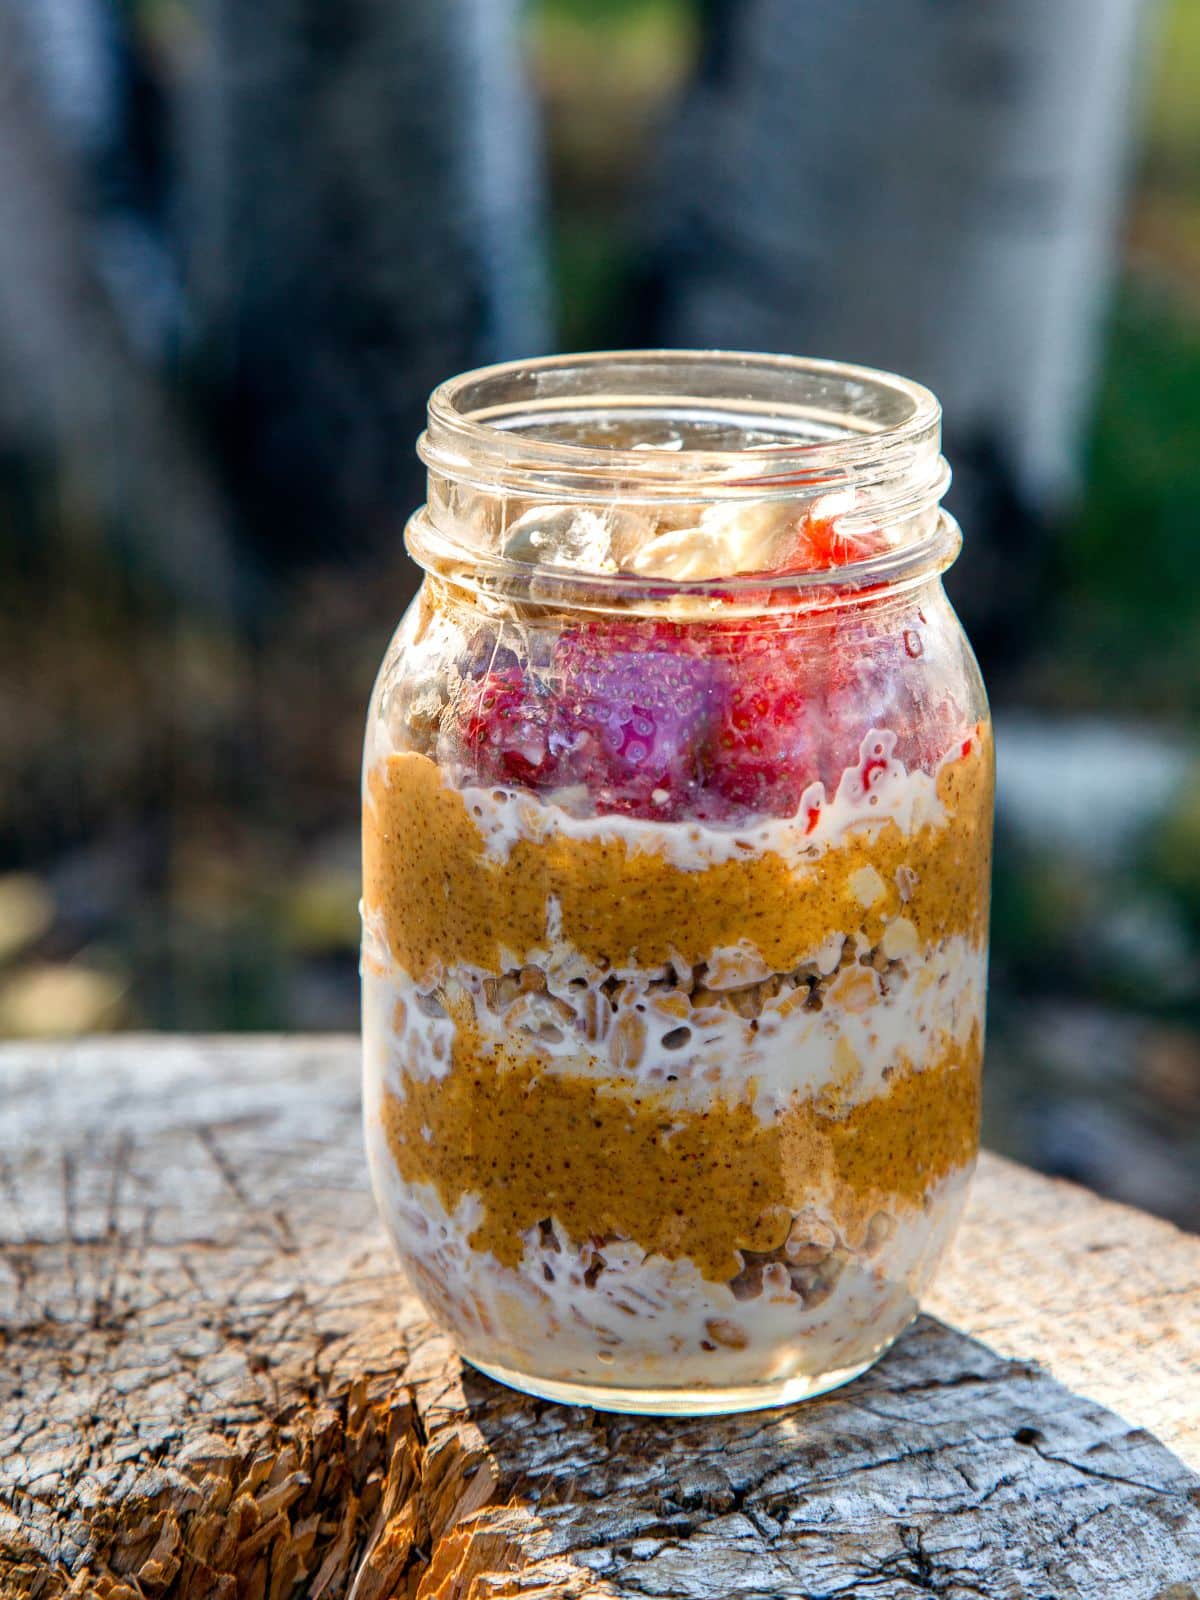 Overnight oats in a glass jar.